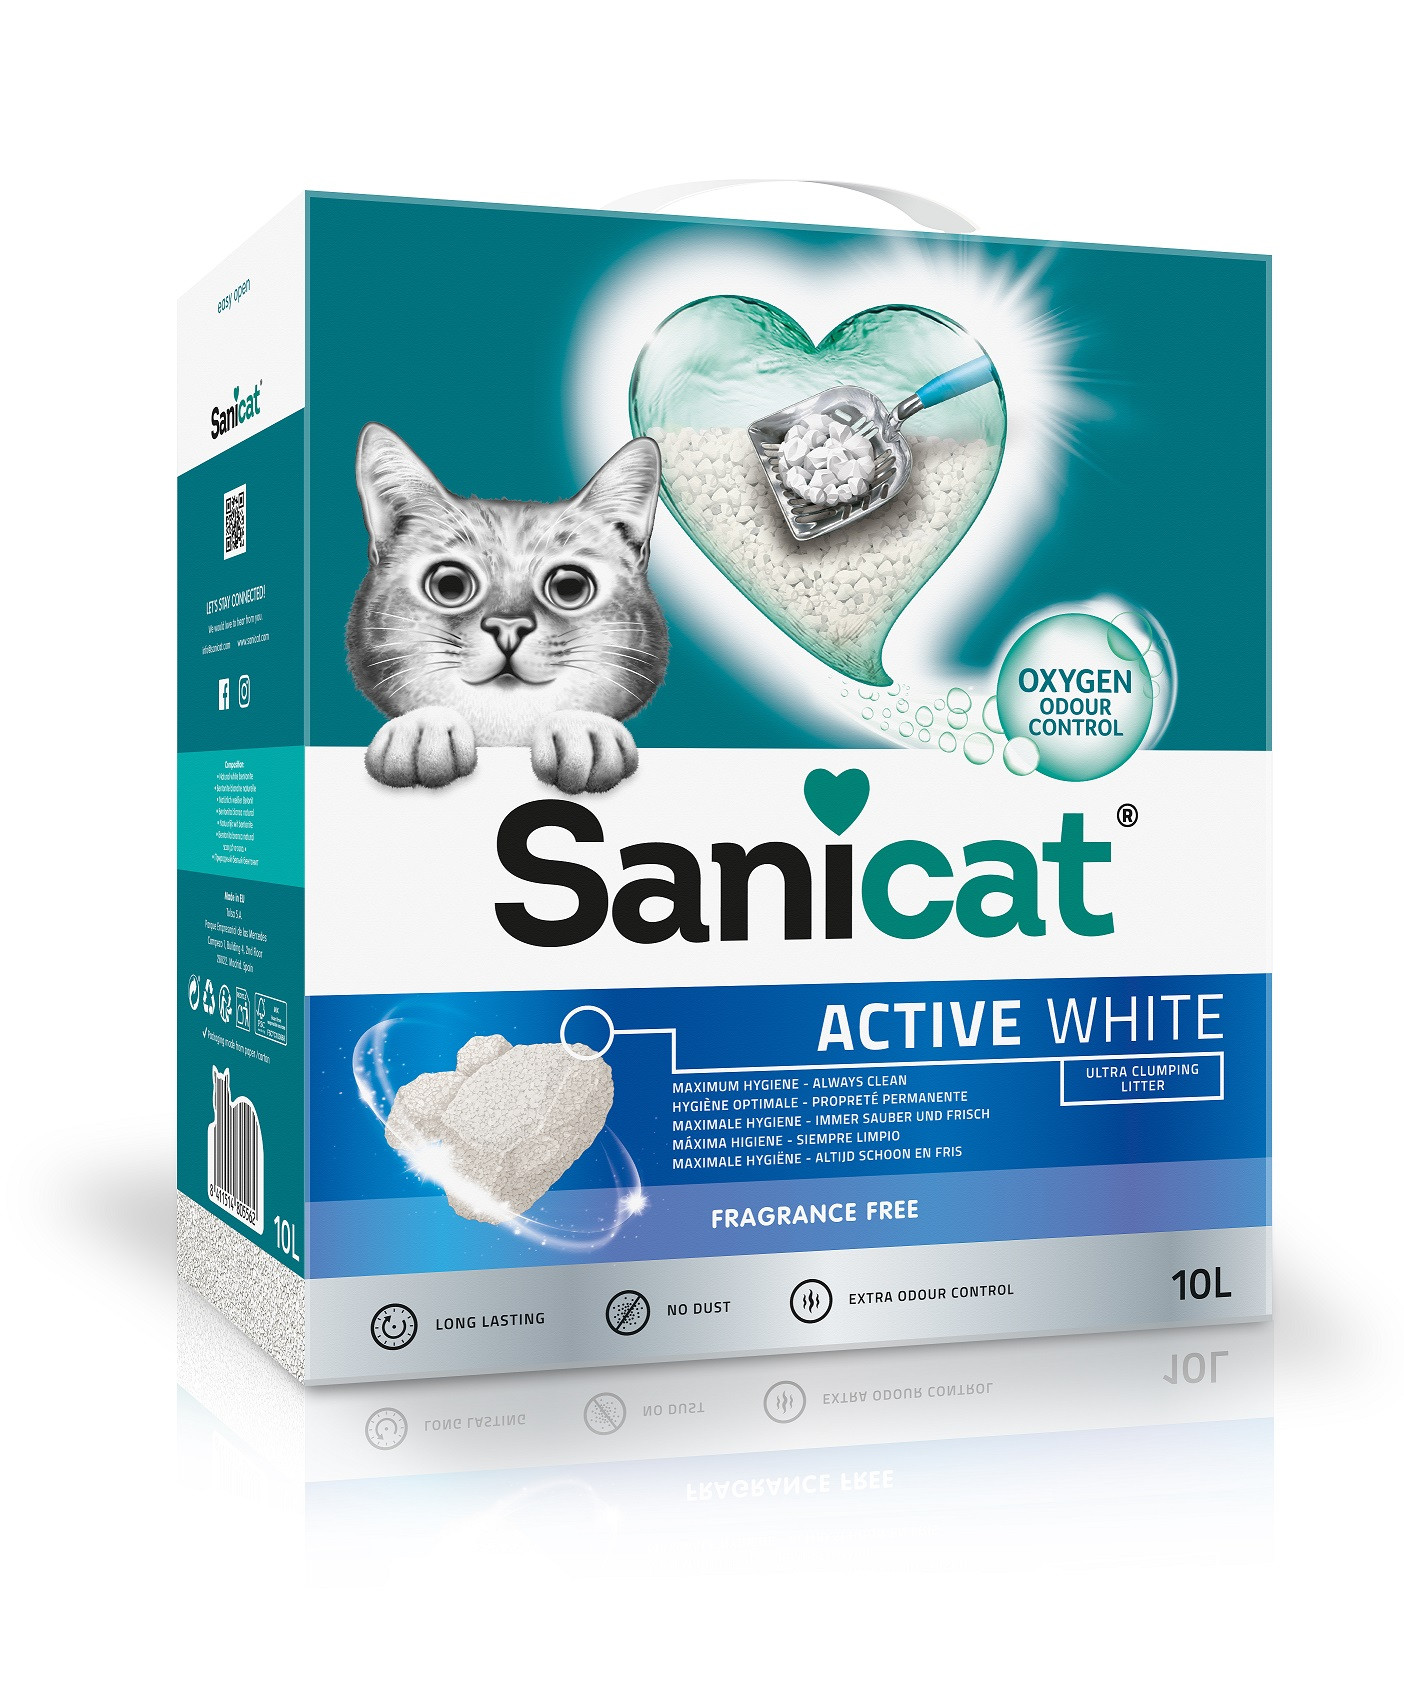 Sanicat Active White kattengrit